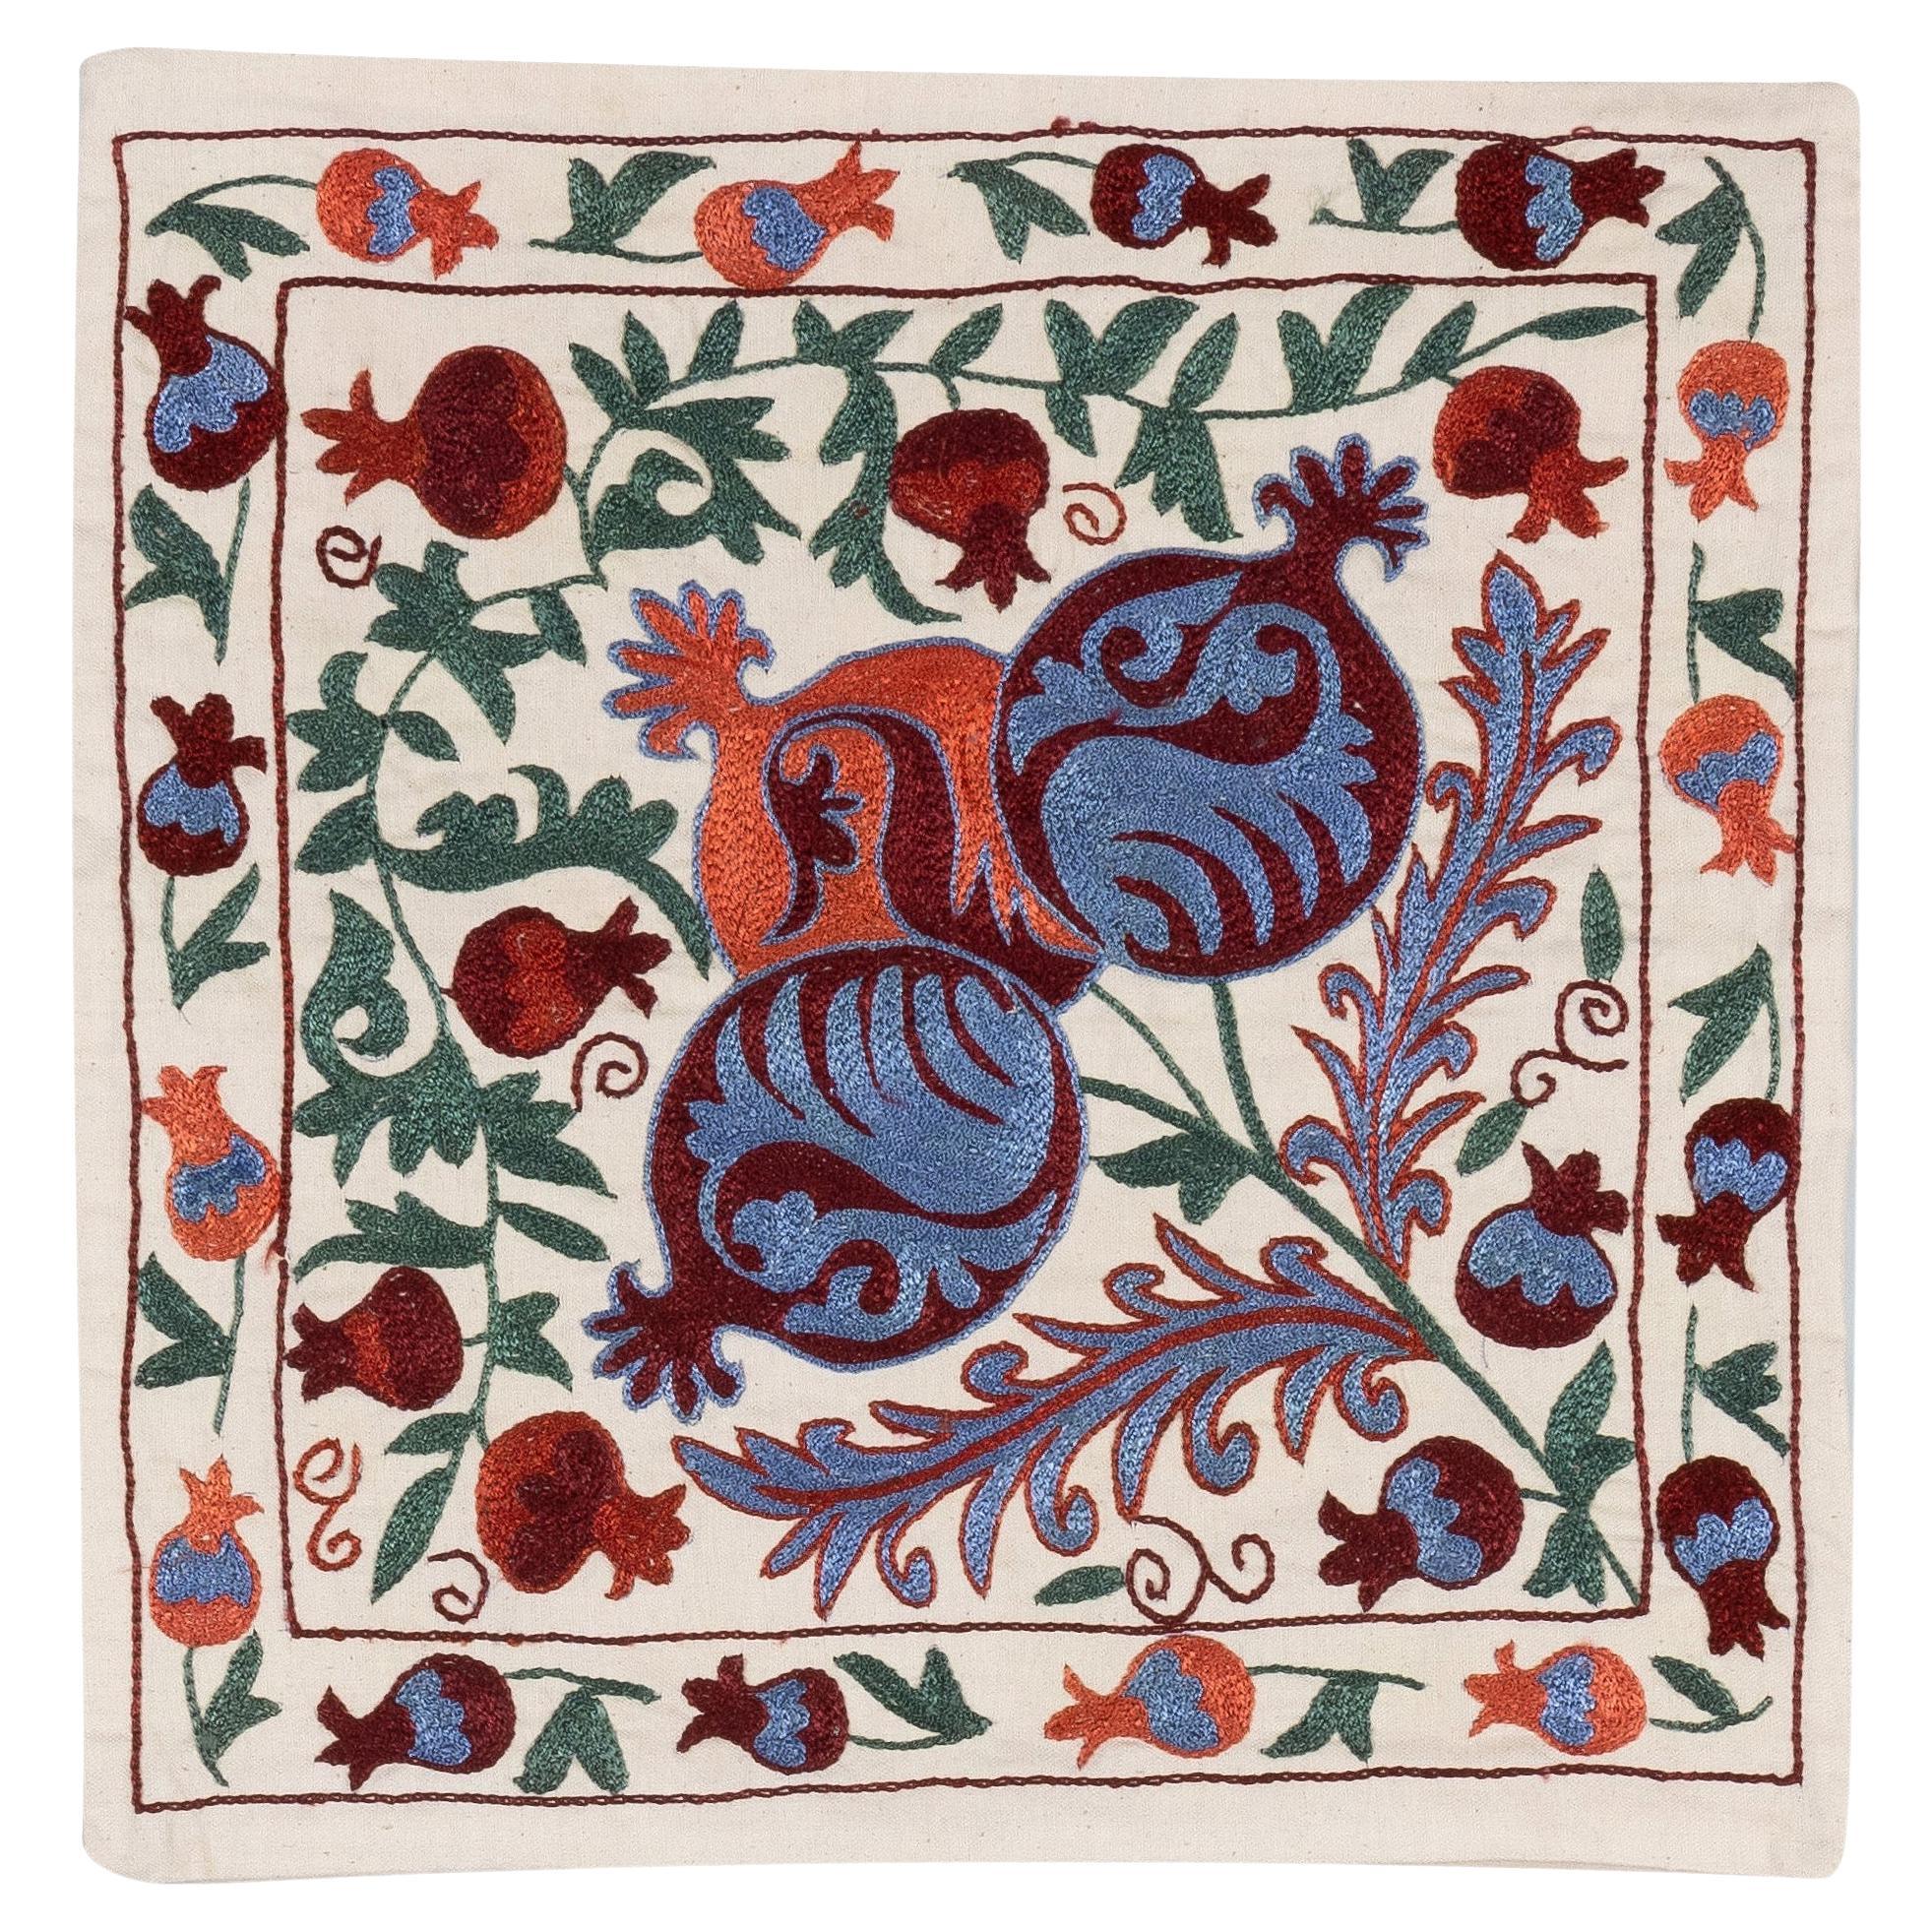 16 "x19" Elegant Handmade Silk Embroidered Suzani Cushion Cover, Cotton Pillow (housse de coussin en coton)